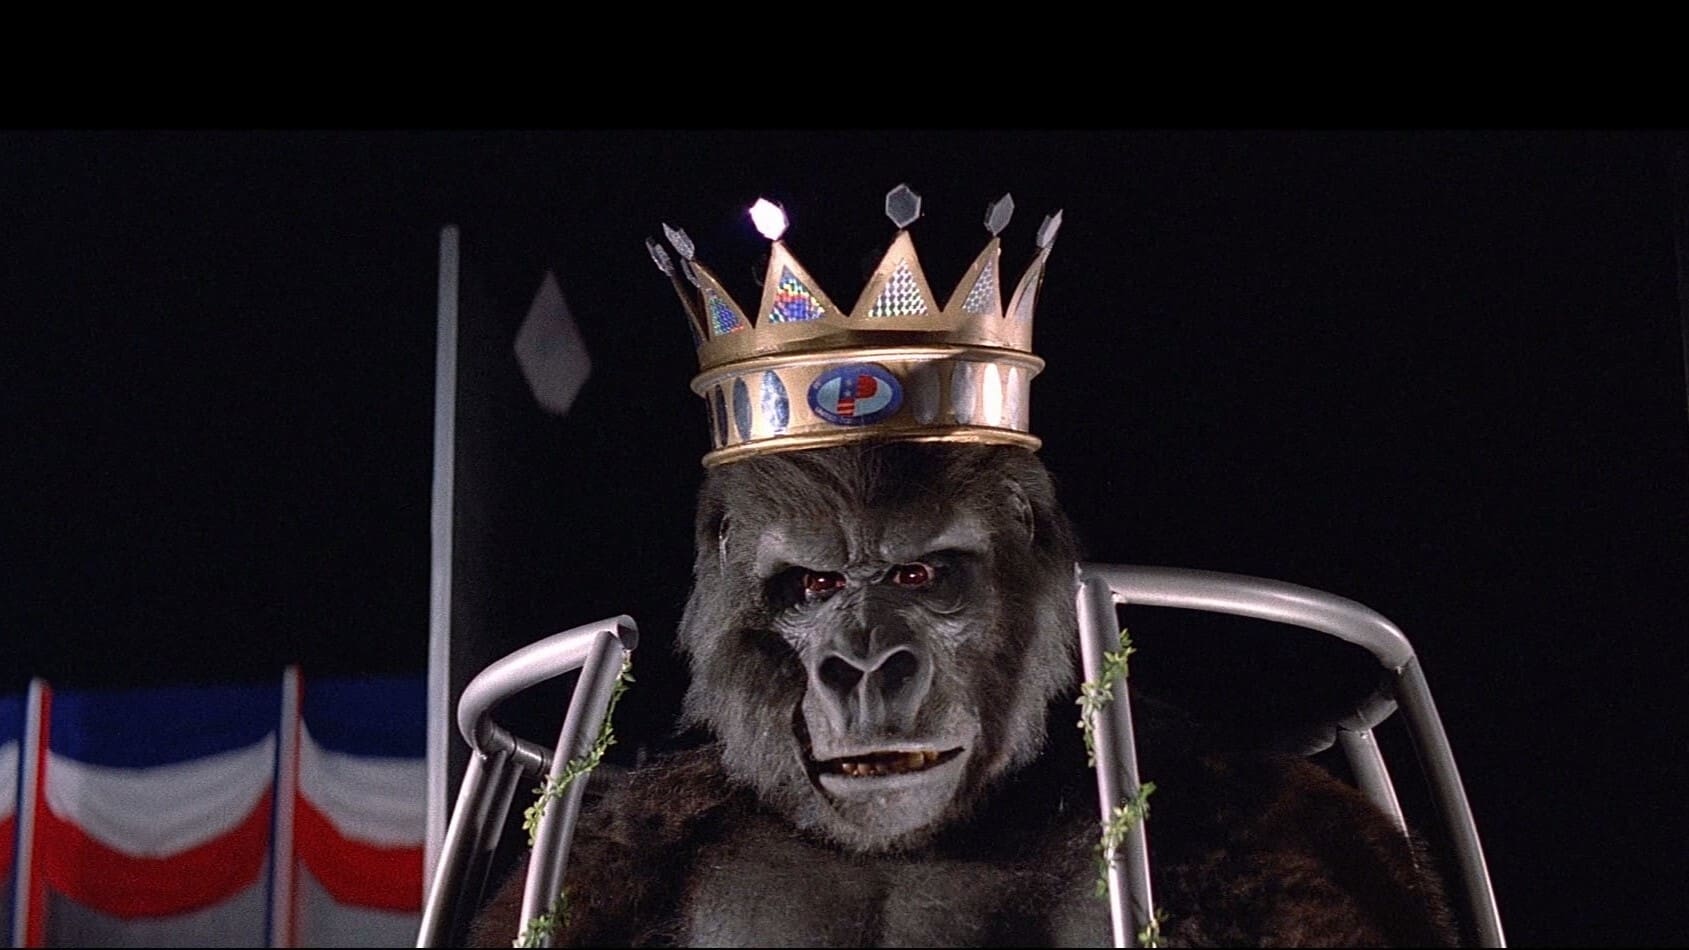 Image du film King Kong ikpexd1kqggbn06ckqxdrjoikuujpg